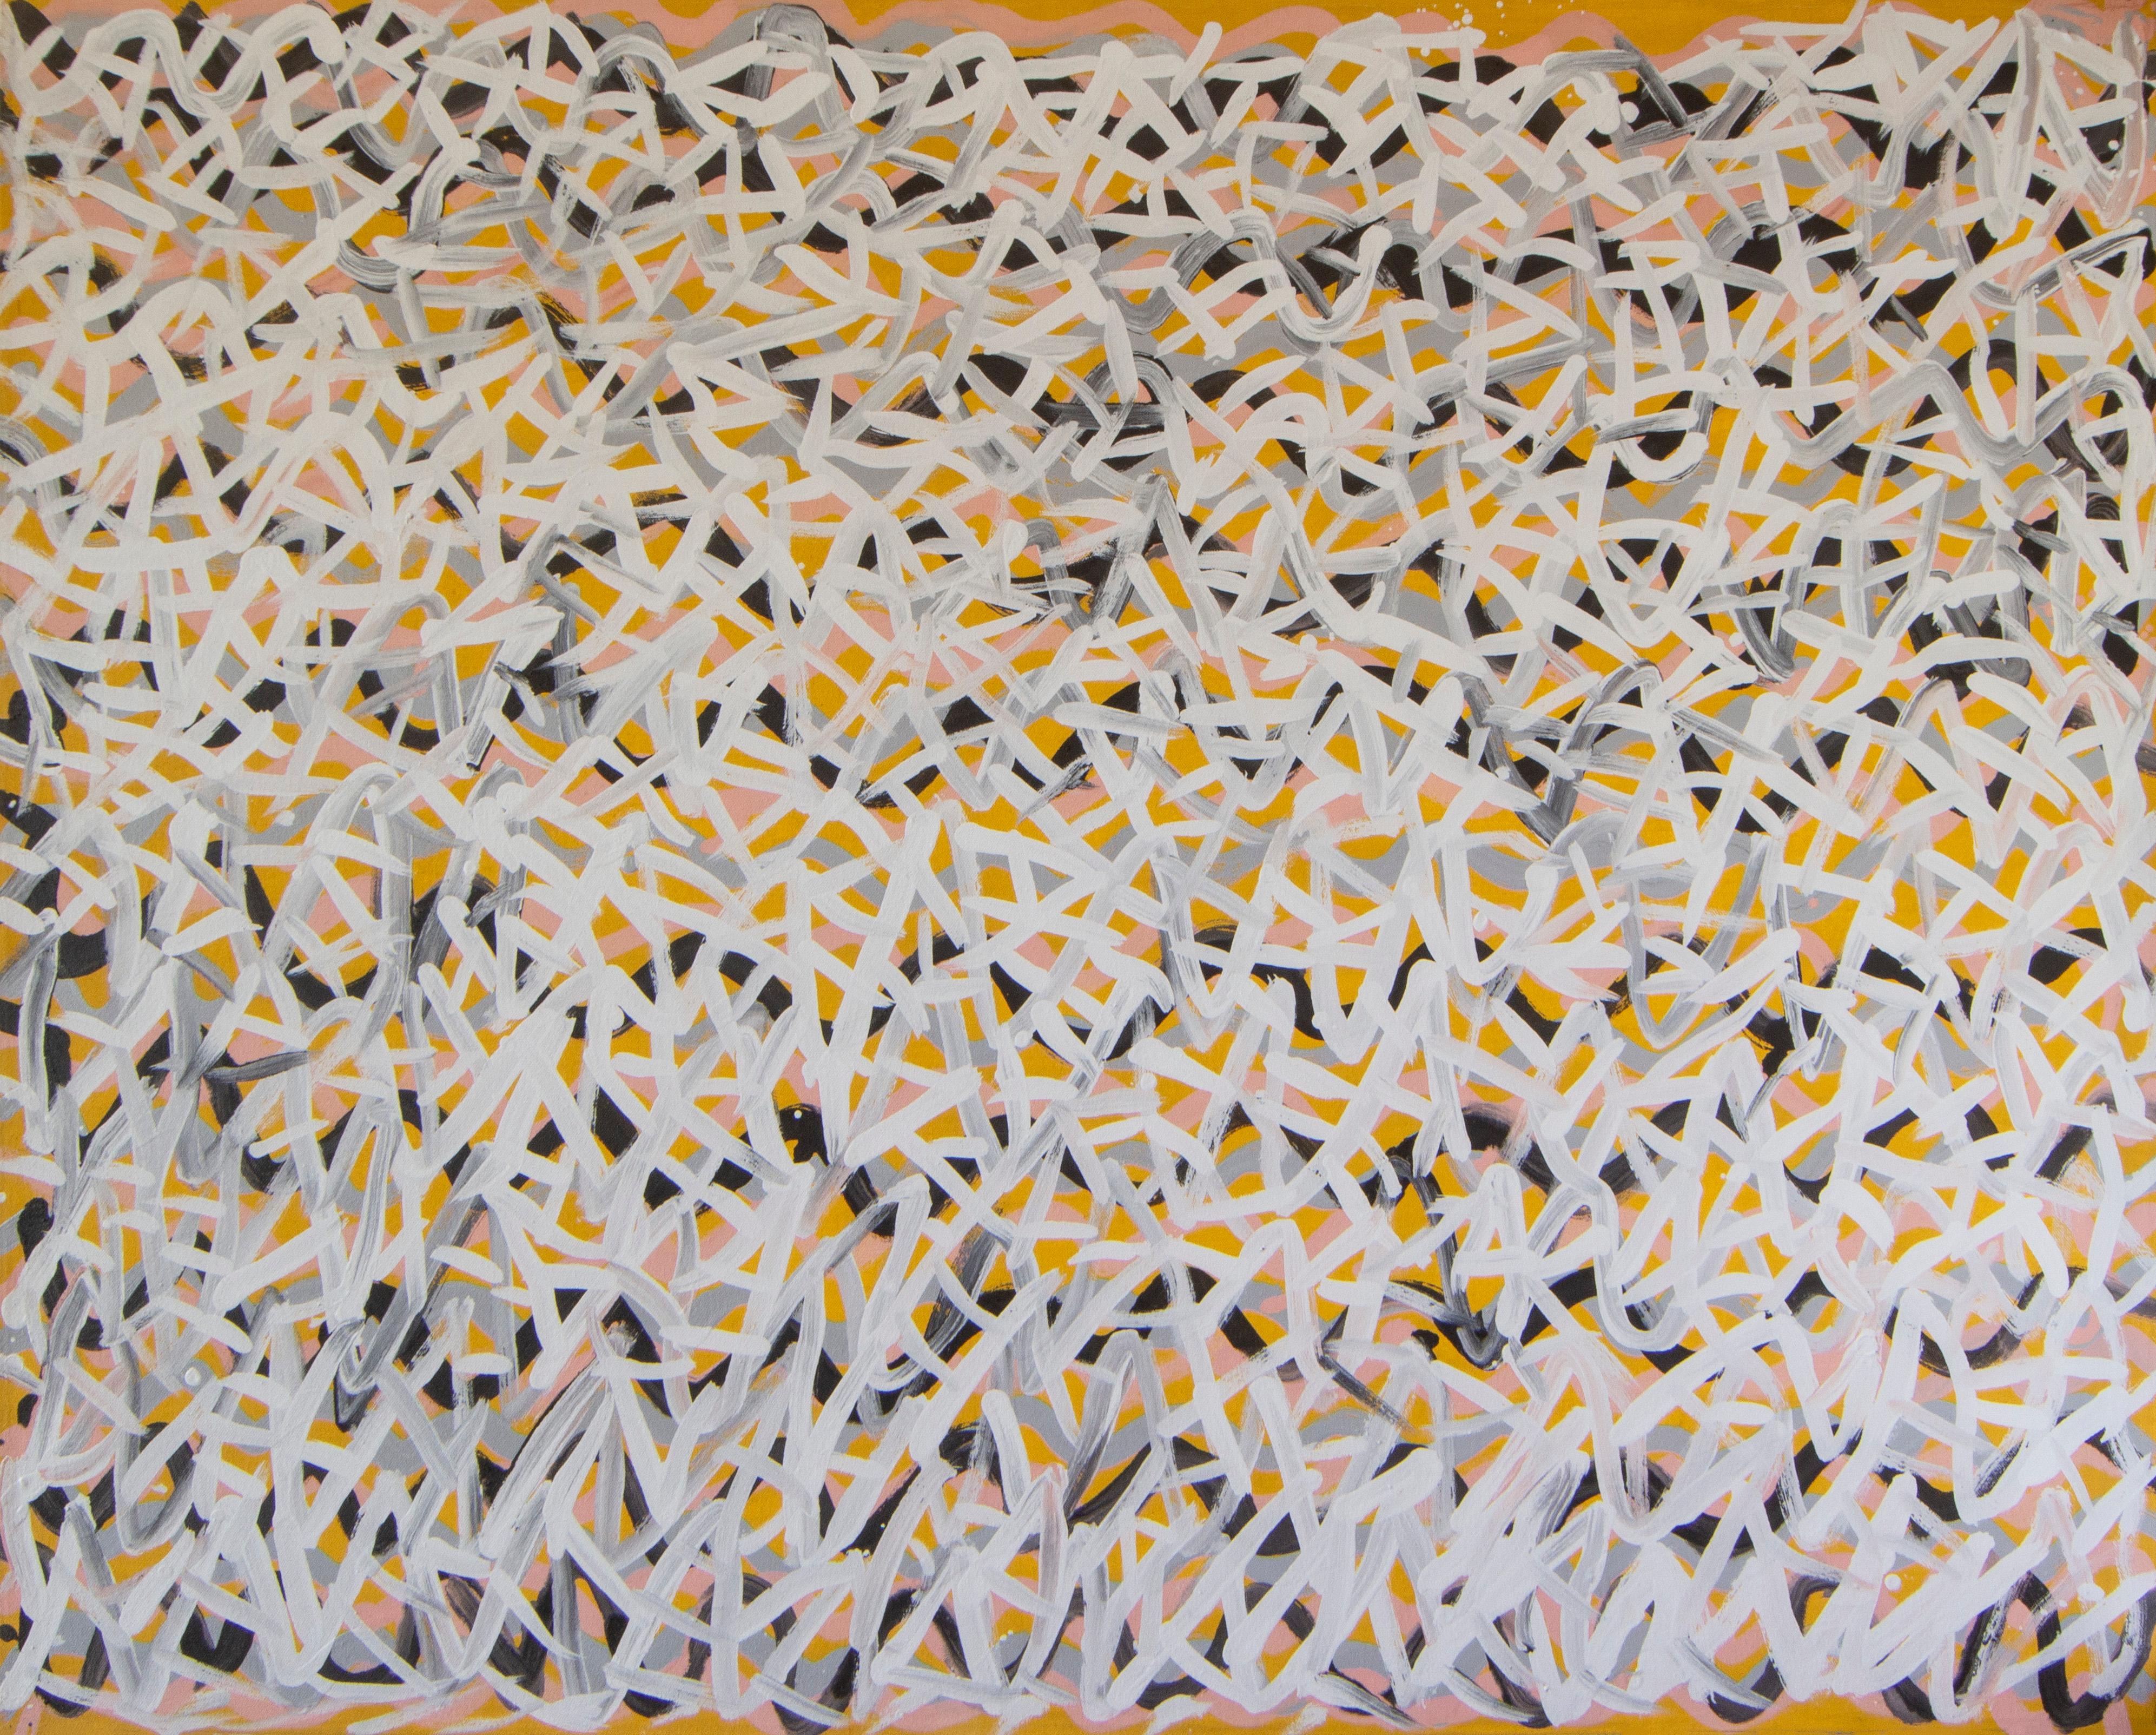 Kittey Malarvie Abstract Painting - Milkwater - Sturt Creek, abstract painting in yellow, pink, white, black.